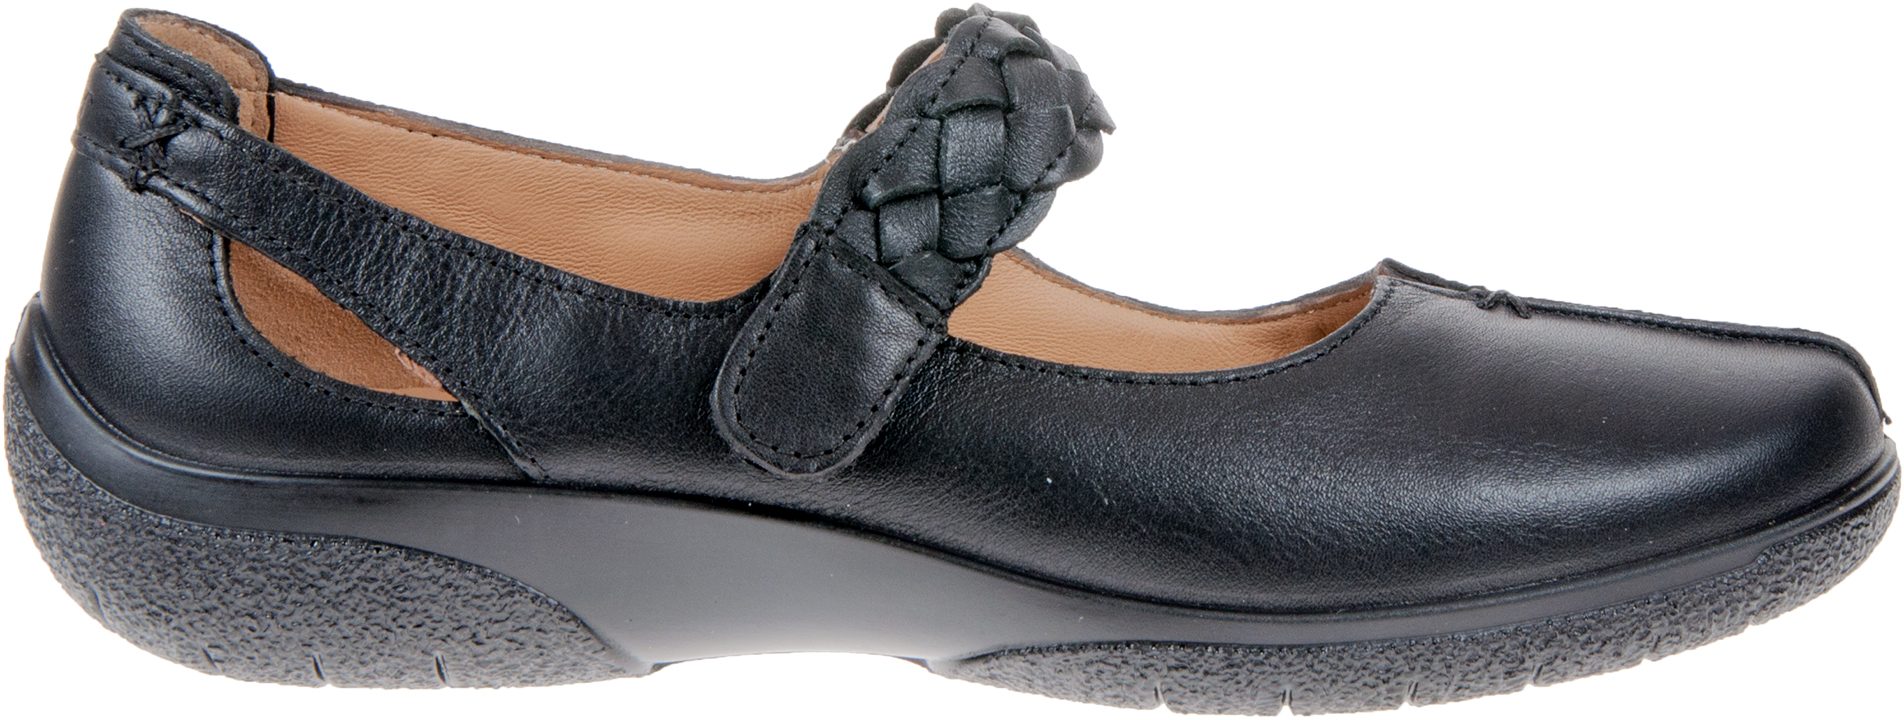 Hotter Shake Black - Ballerina Shoes - Humphries Shoes